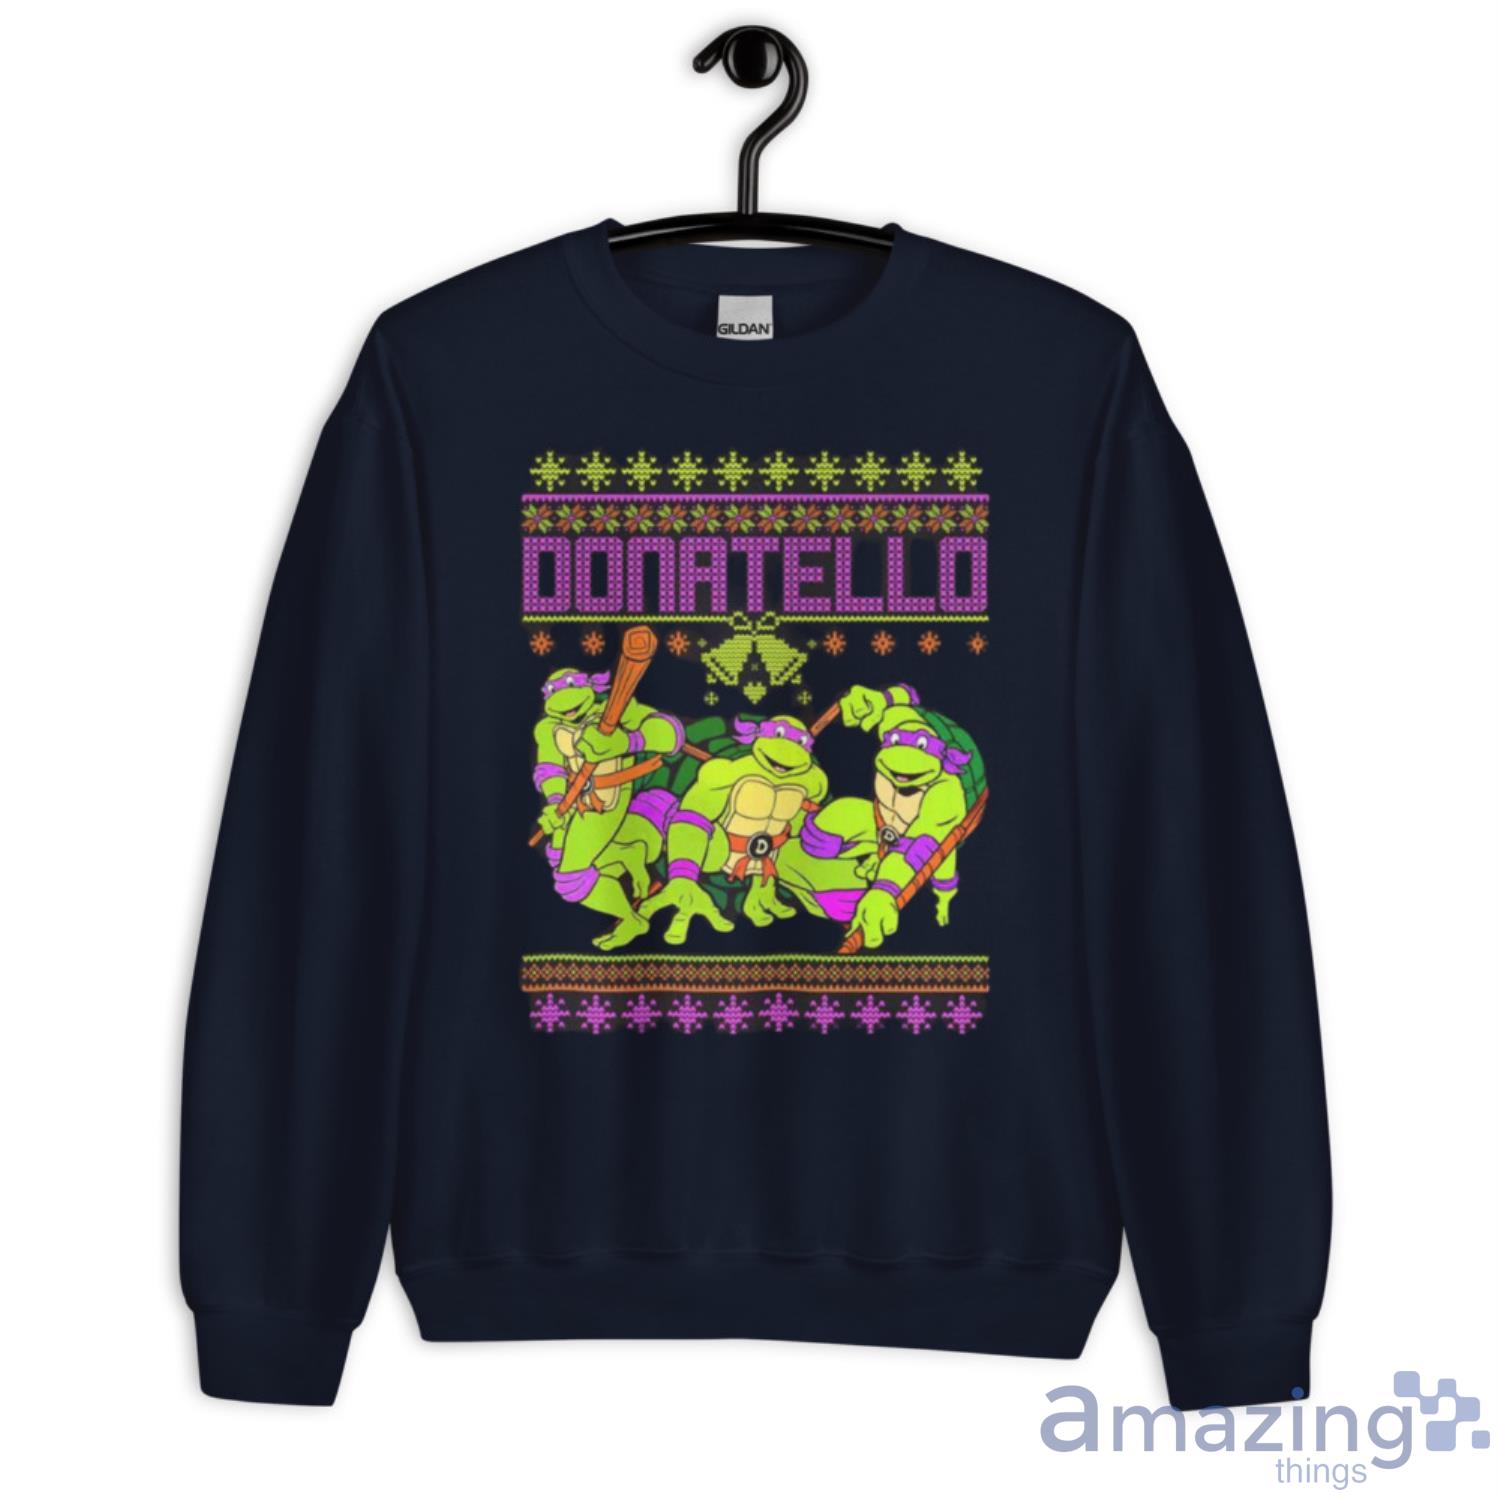 https://image.whatamazingthings.com/2022/10/donatello-tmnt-ugly-christmas-shirt-2.jpeg